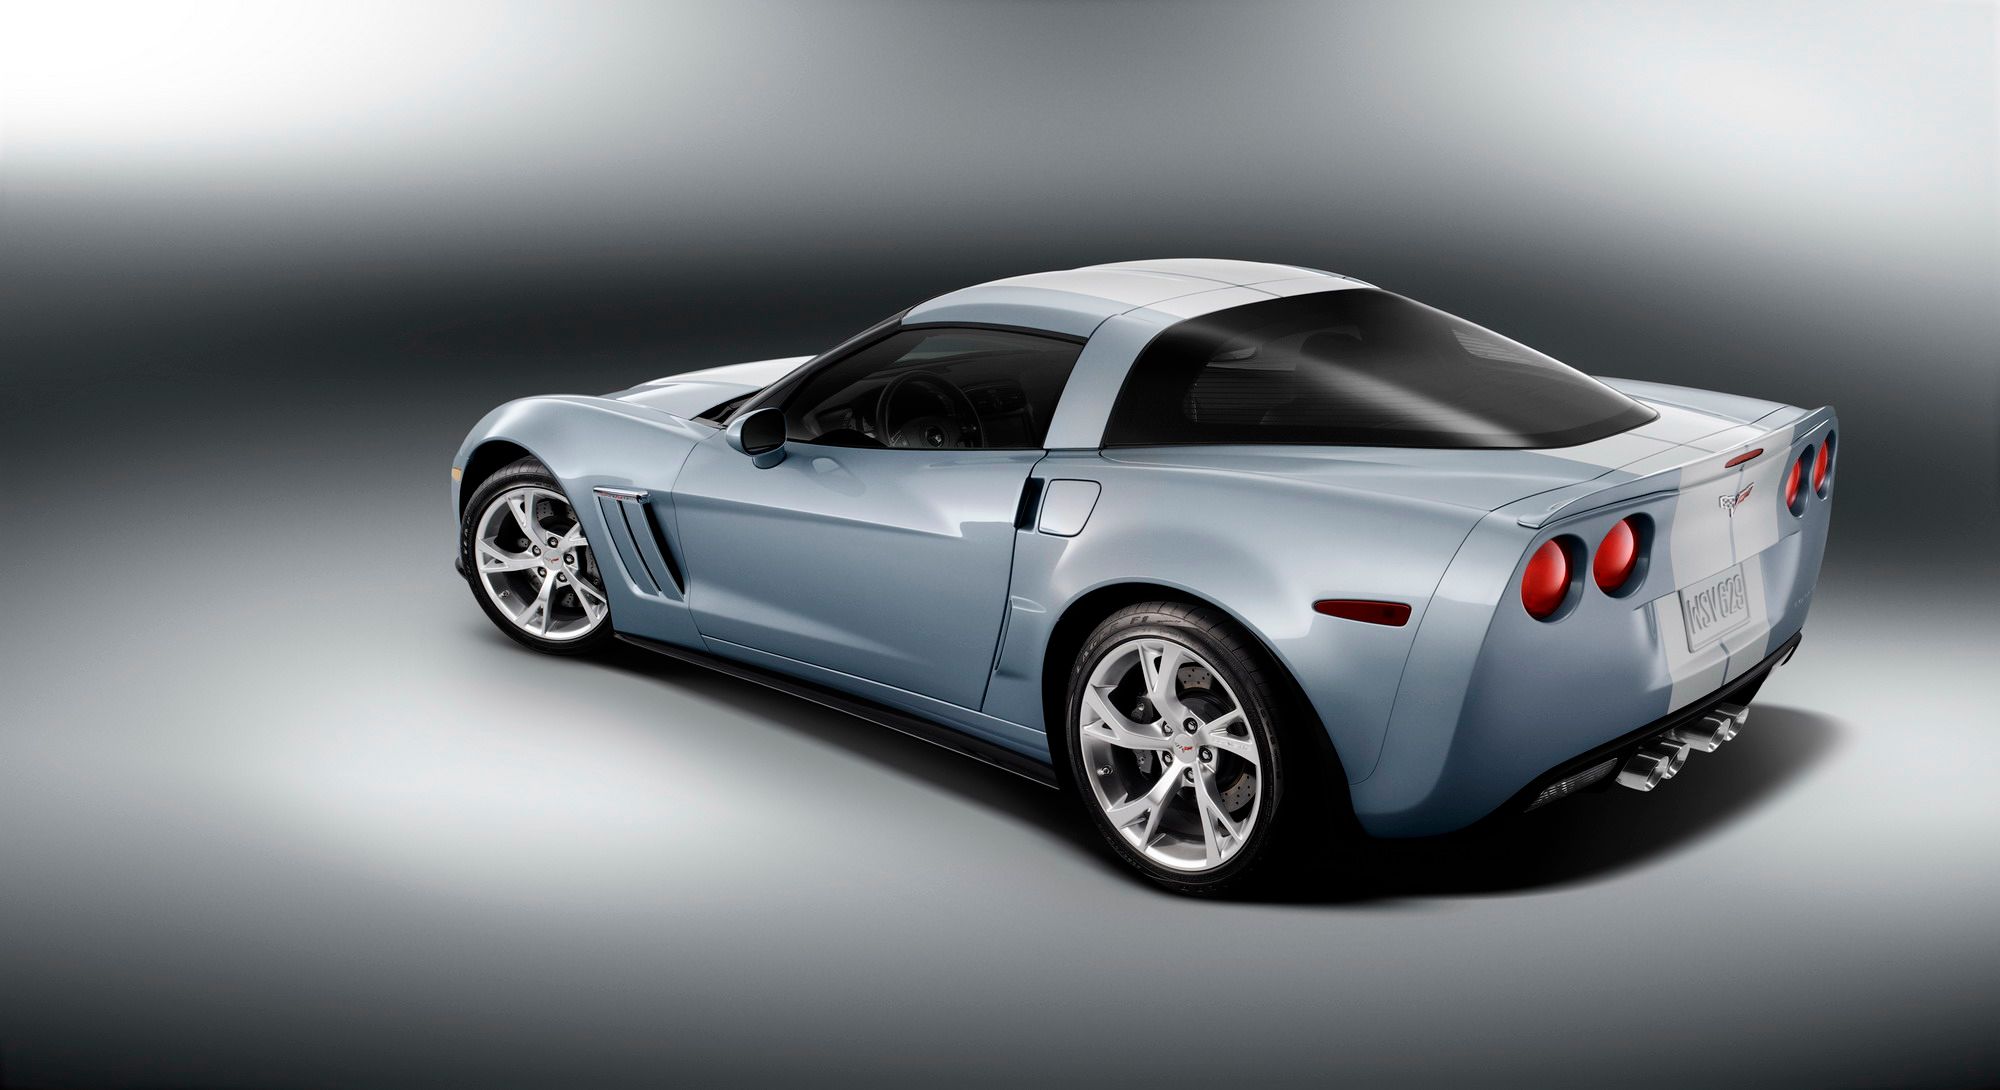 2012 Chevrolet Corvette Carlisle Blue Grand Sport Concept